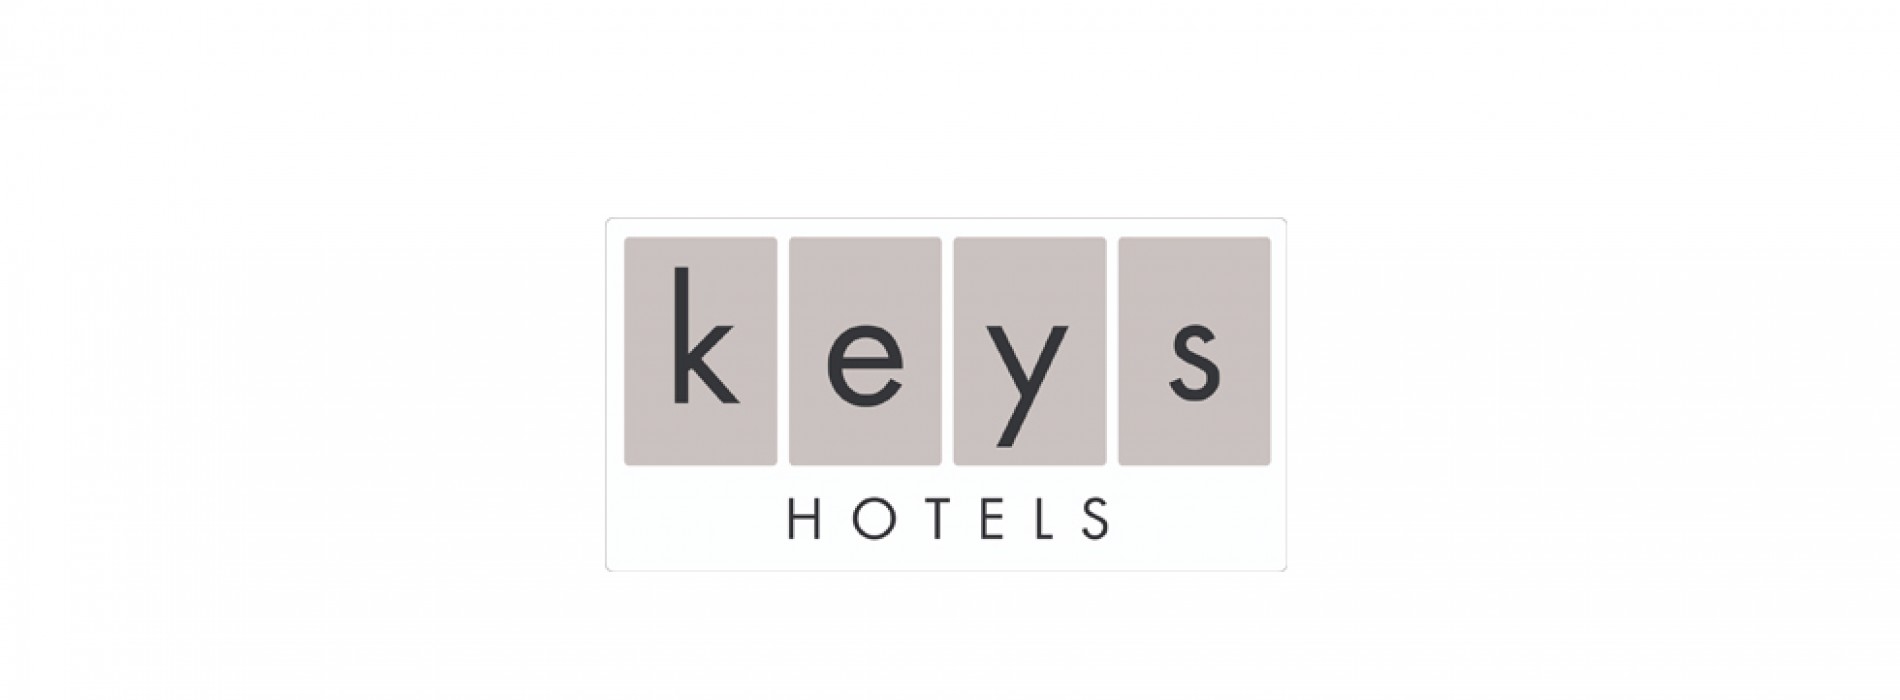 Keys Hotels hits the list of Mumbai’s hot 50 brands